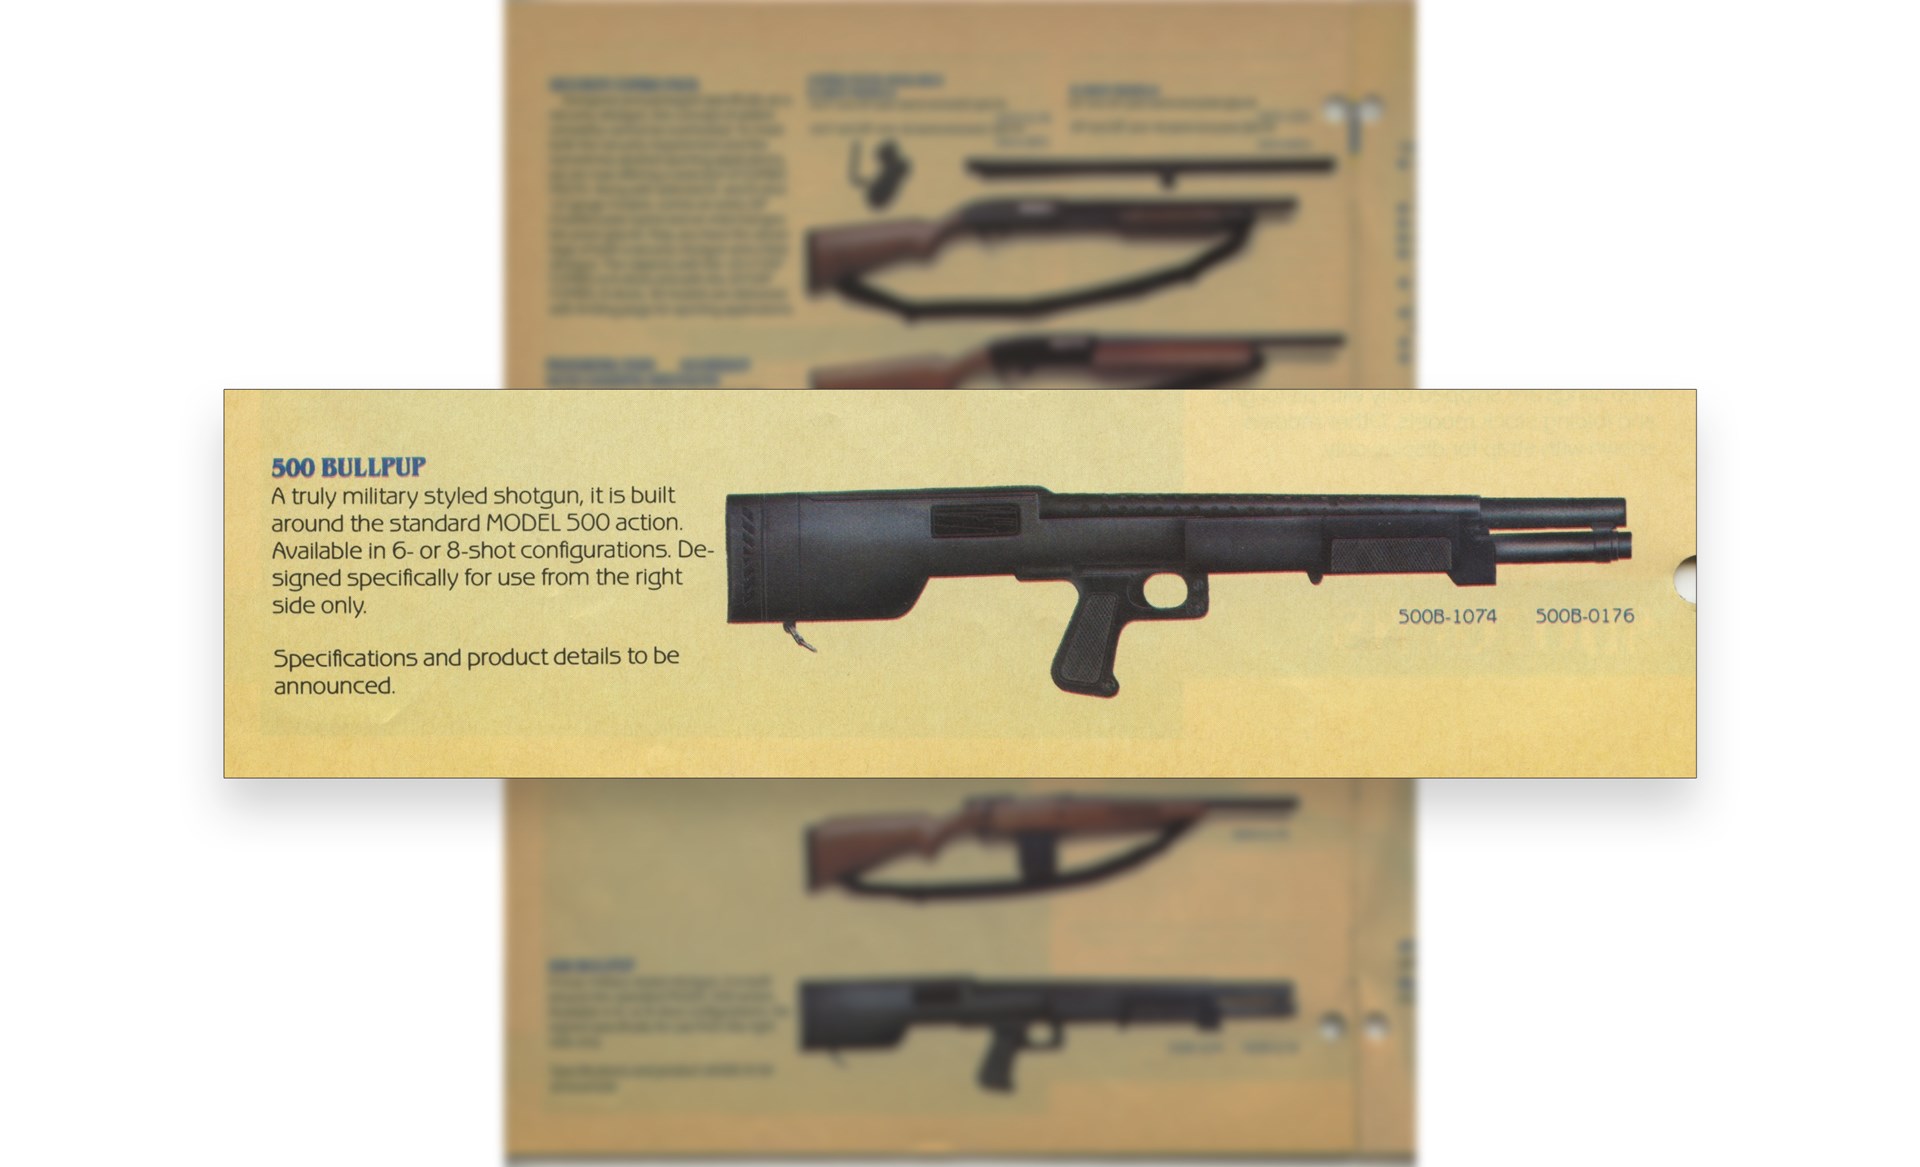 1985 Mossberg product catalog excerpt showing pump-action shotguns Model 500 Bullpup